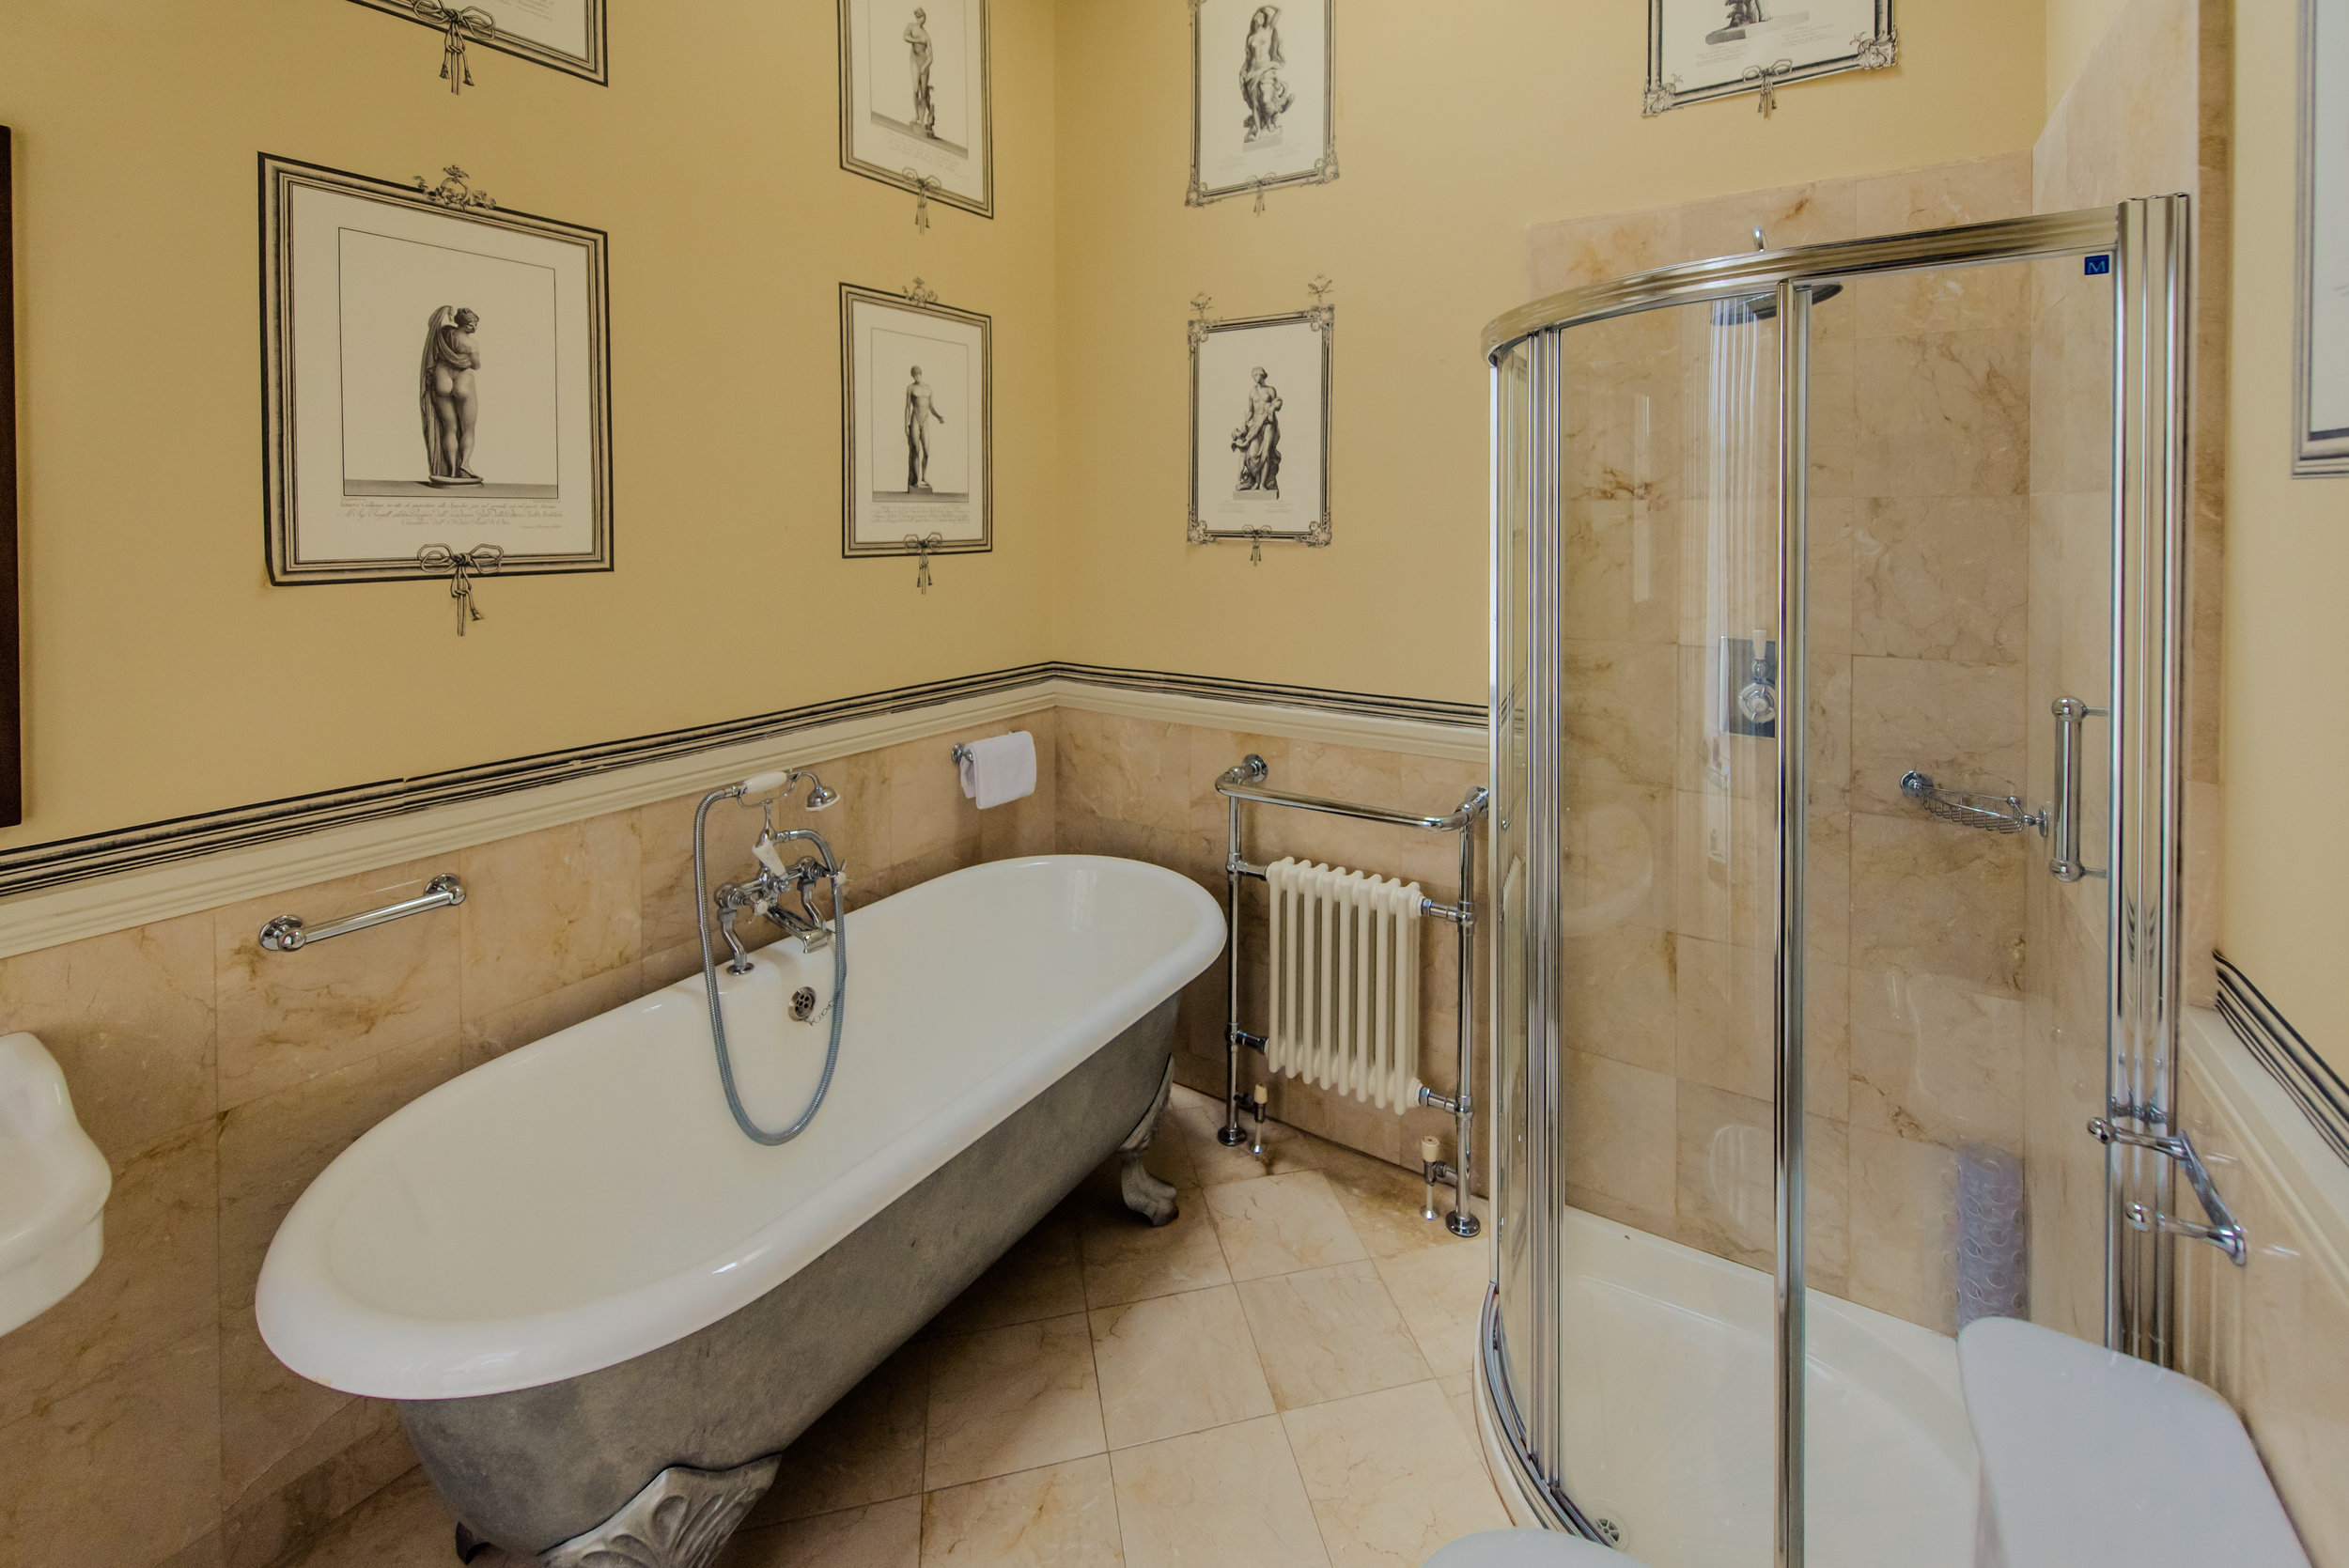 Tulfarris Hotel & Golf Resort Manor House bathroom with beautiful wallpaper and glass shower.jpg